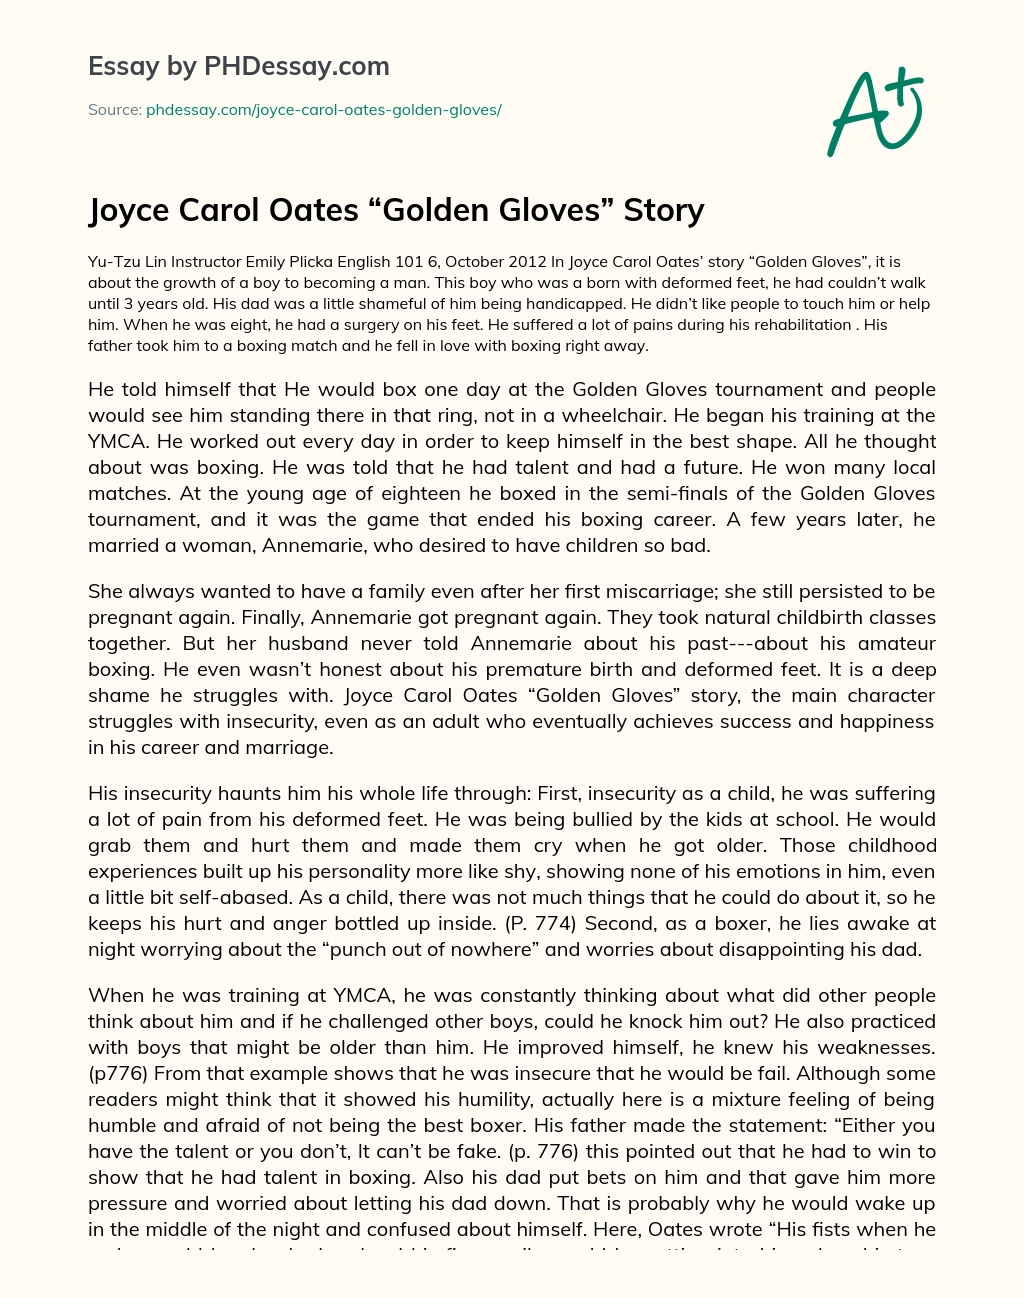 Joyce Carol Oates “Golden Gloves” Story essay